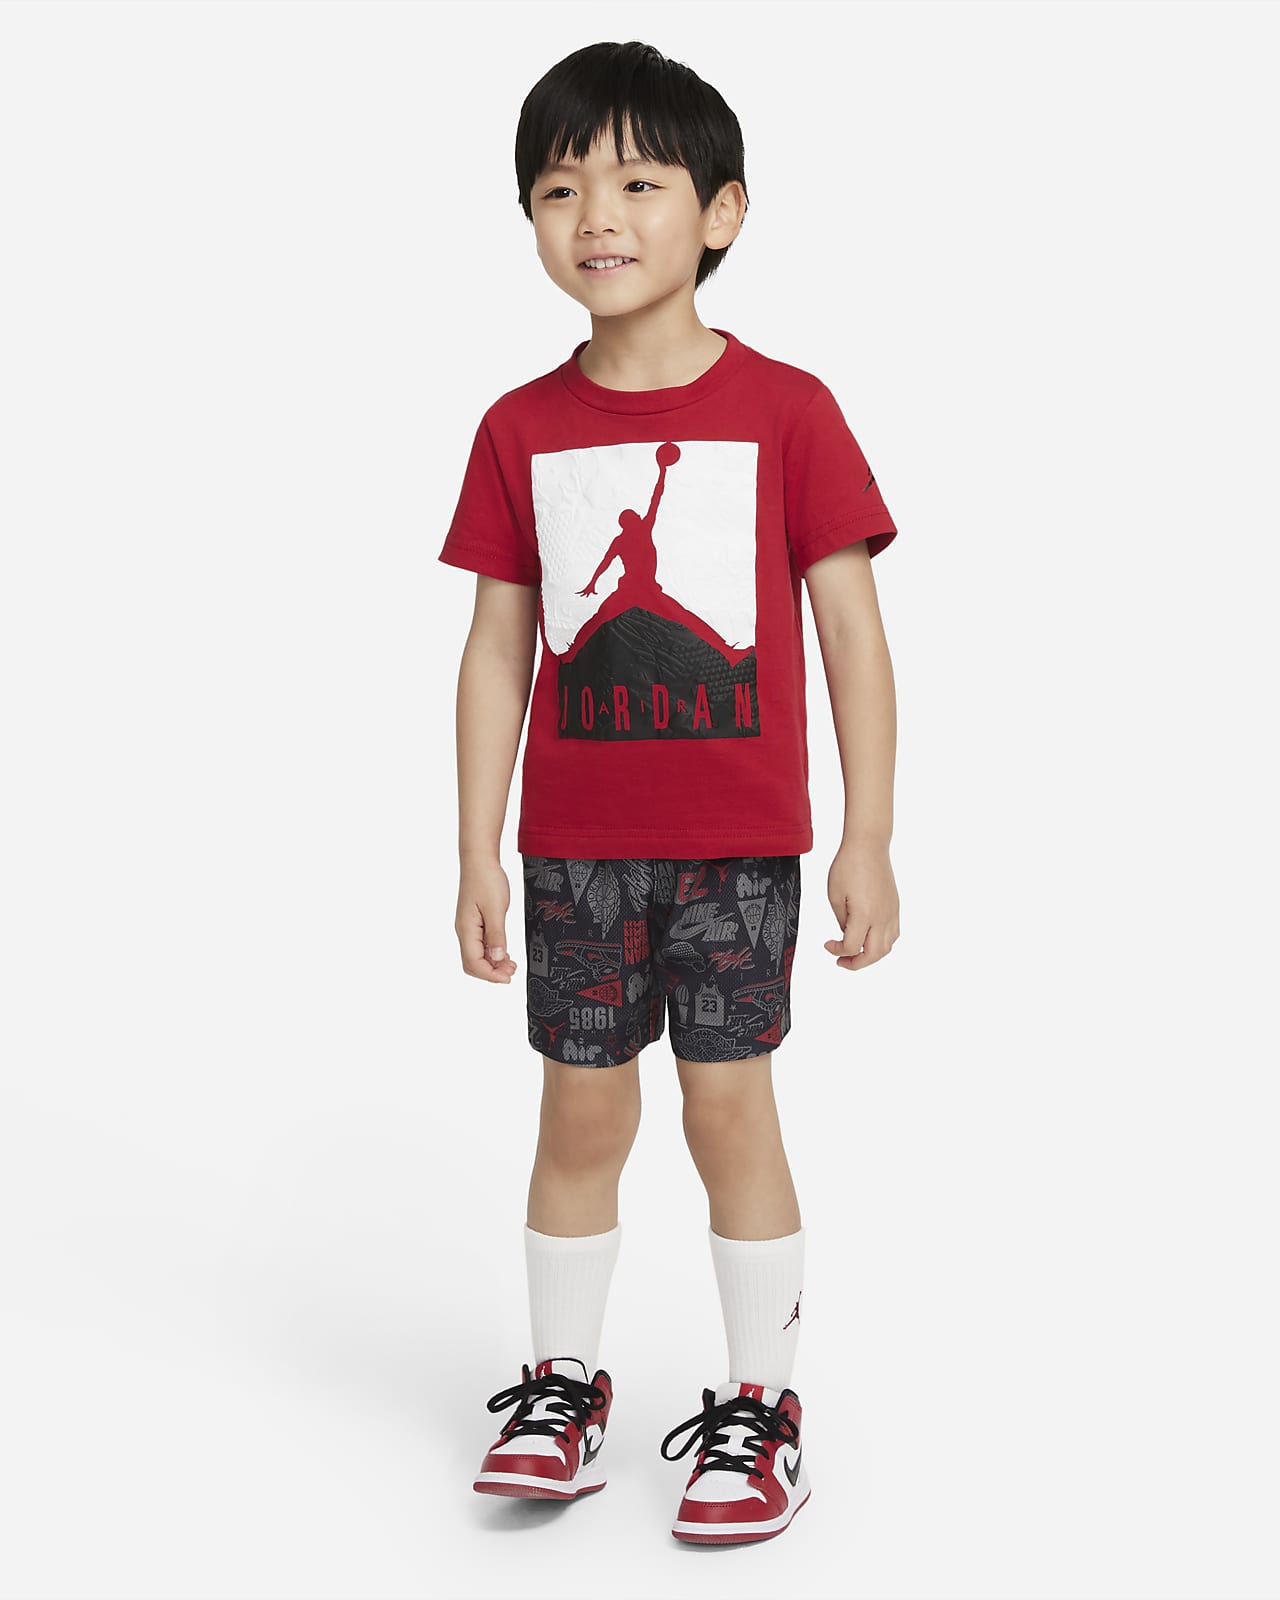 Menda City chikane heldig Jordan Toddler T-Shirt and Shorts Set. Nike.com